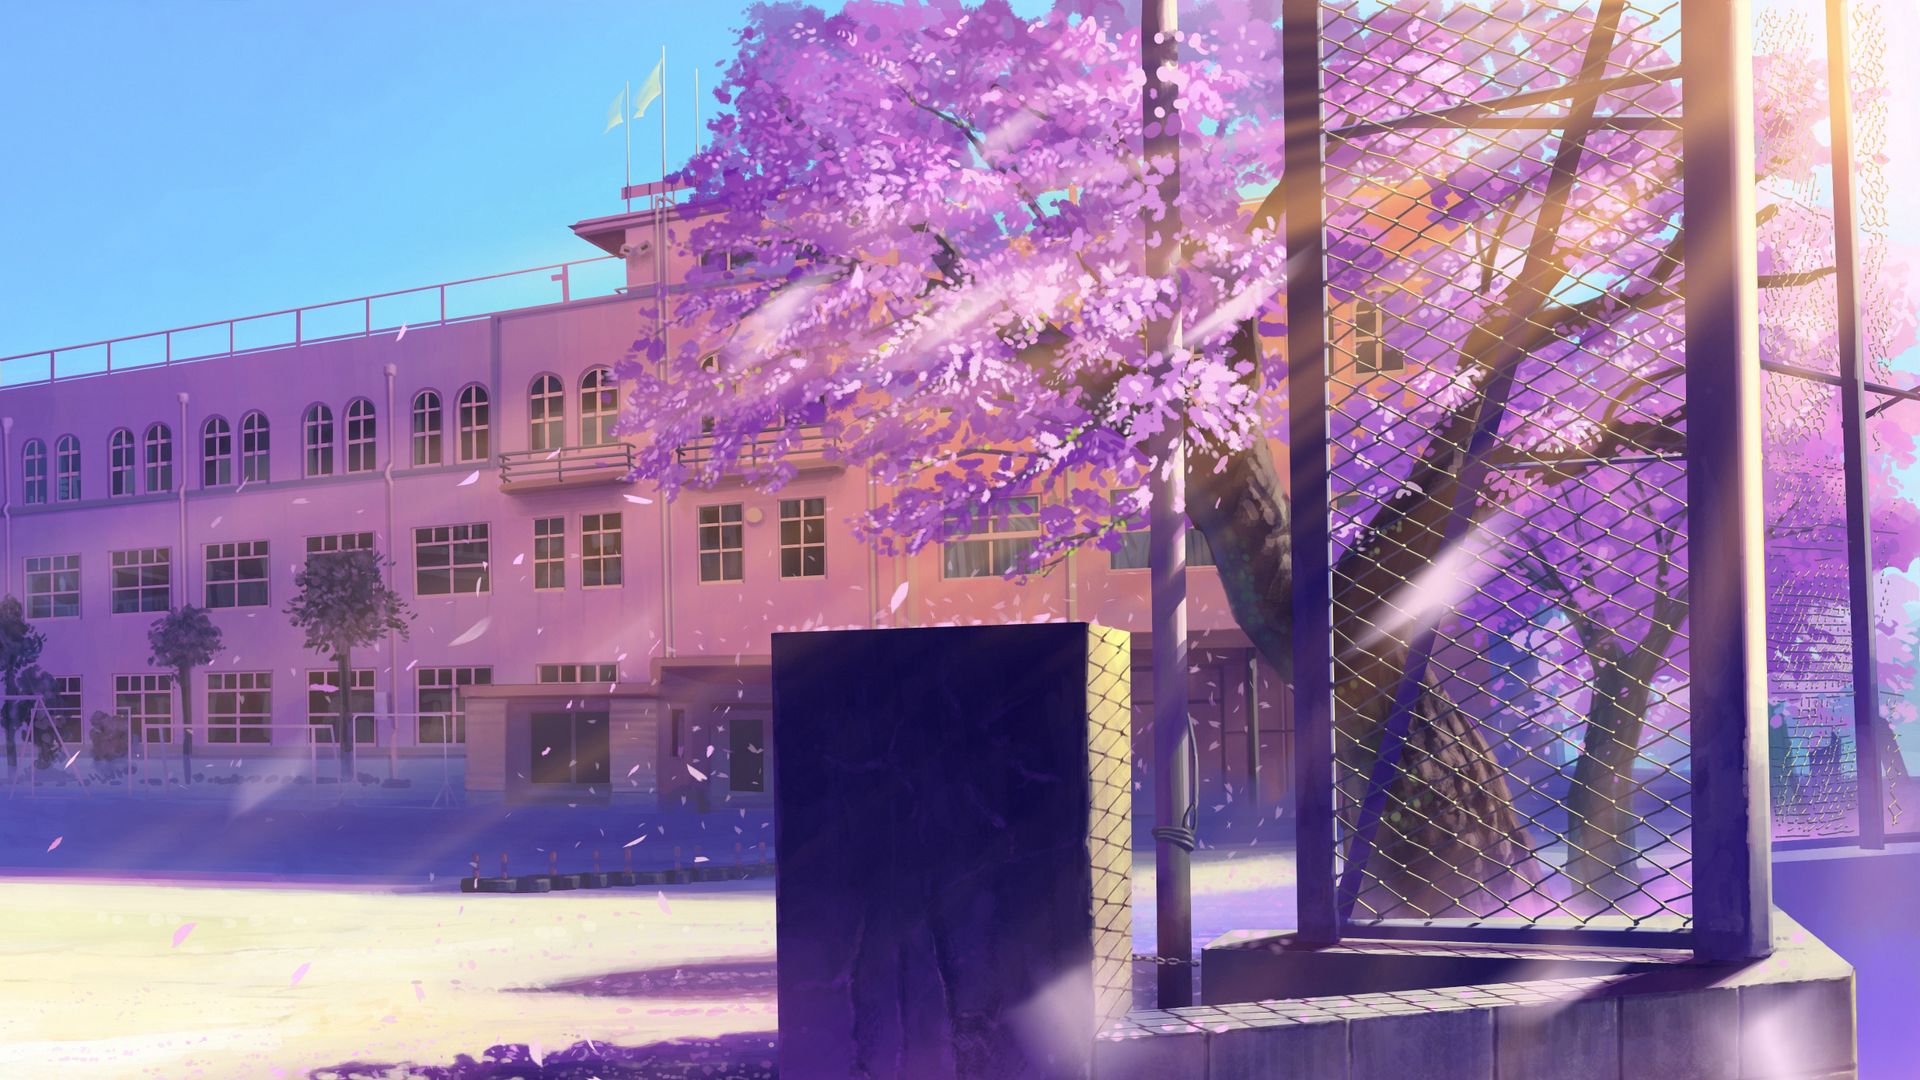 Download wallpaper 1920x1080 anime, school, winter street full hd, hdtv, fhd, 1080p HD background